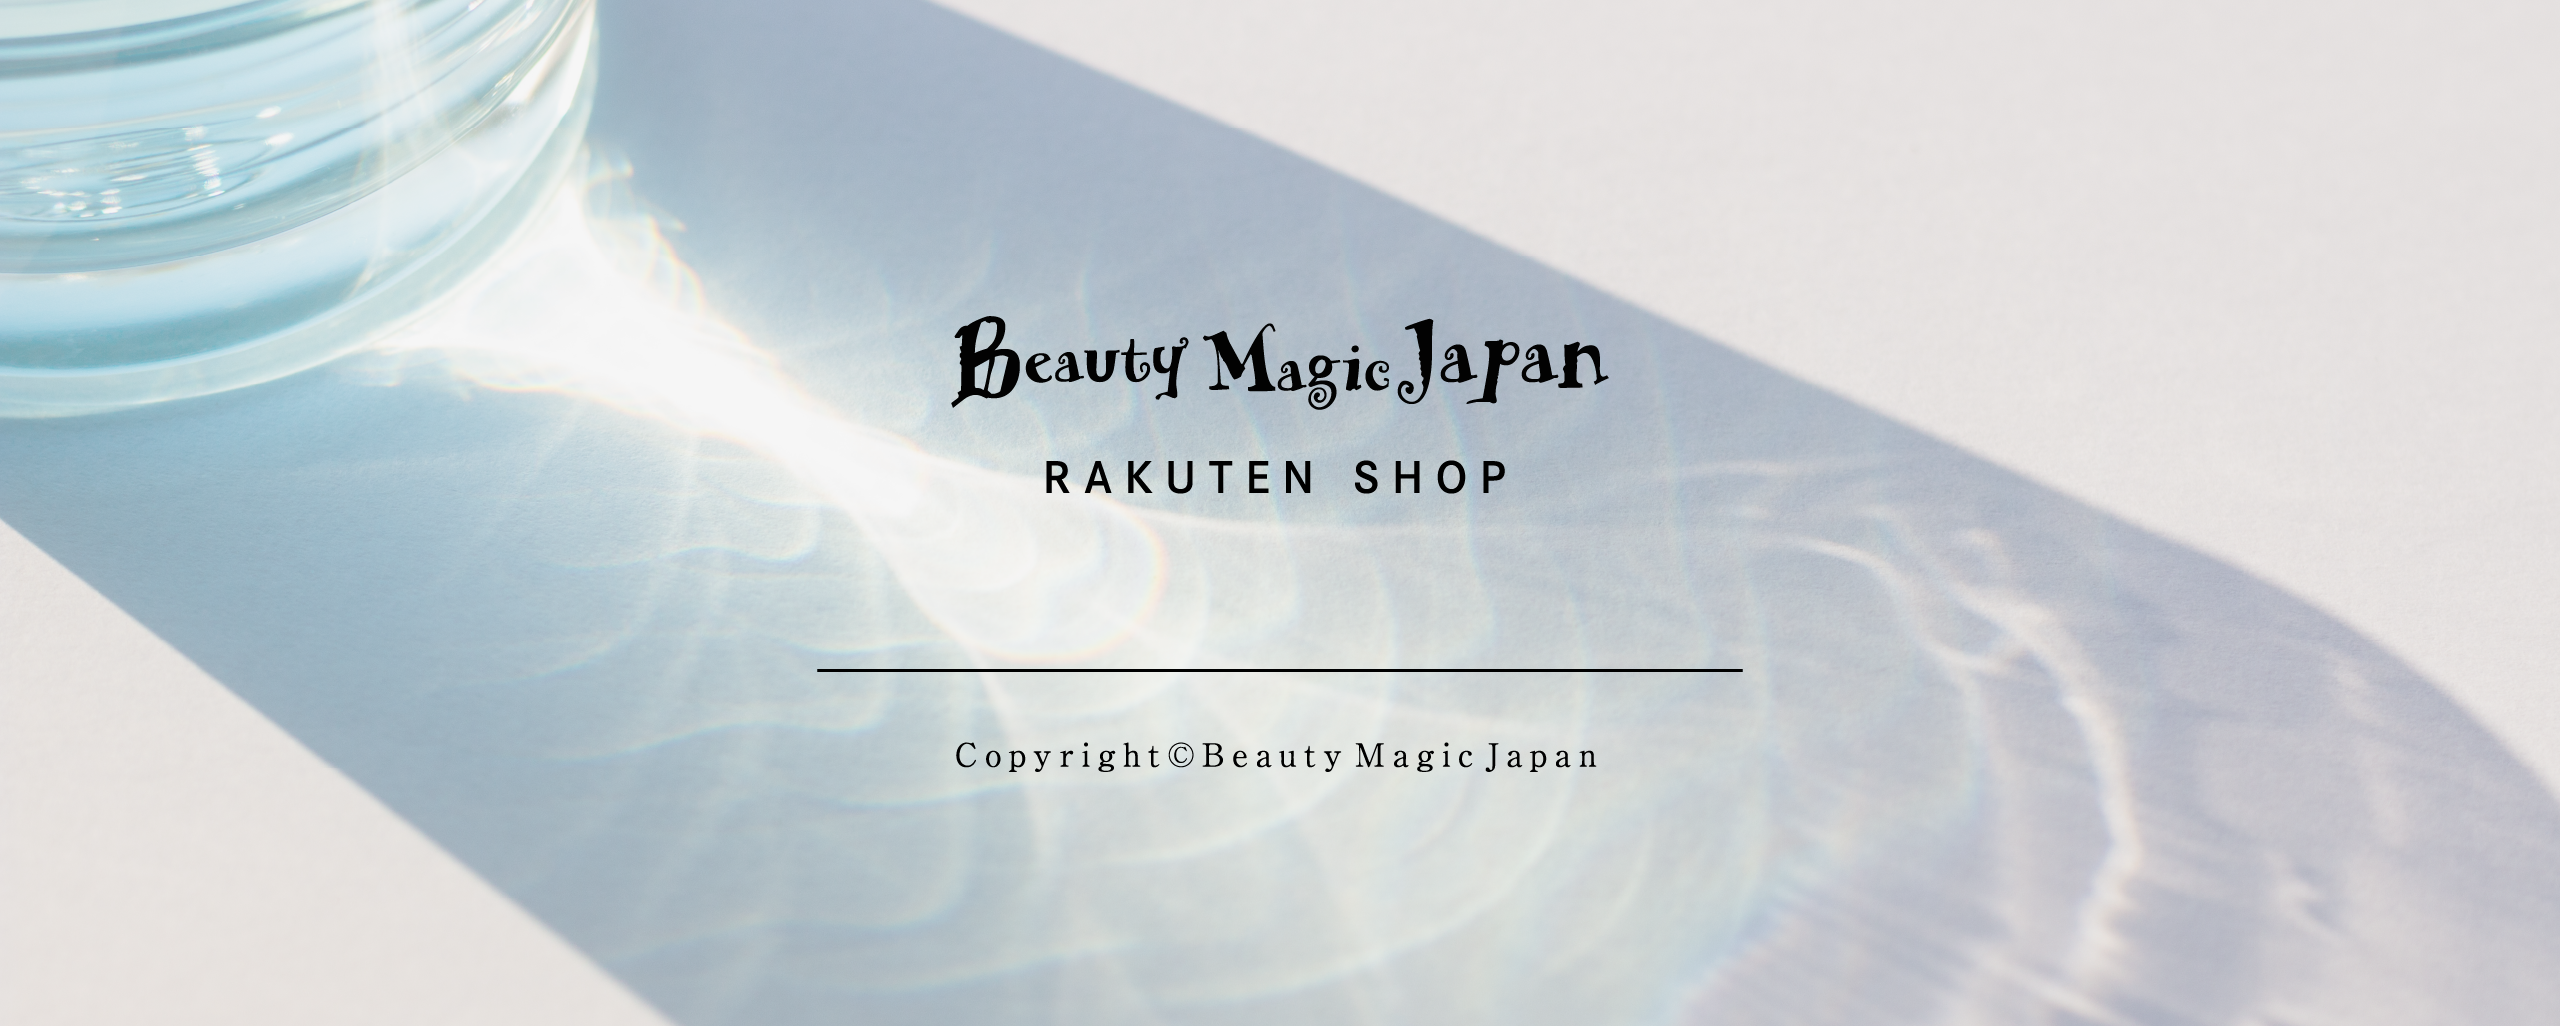 Beauty Magic Japan RAKUTEN SHOP